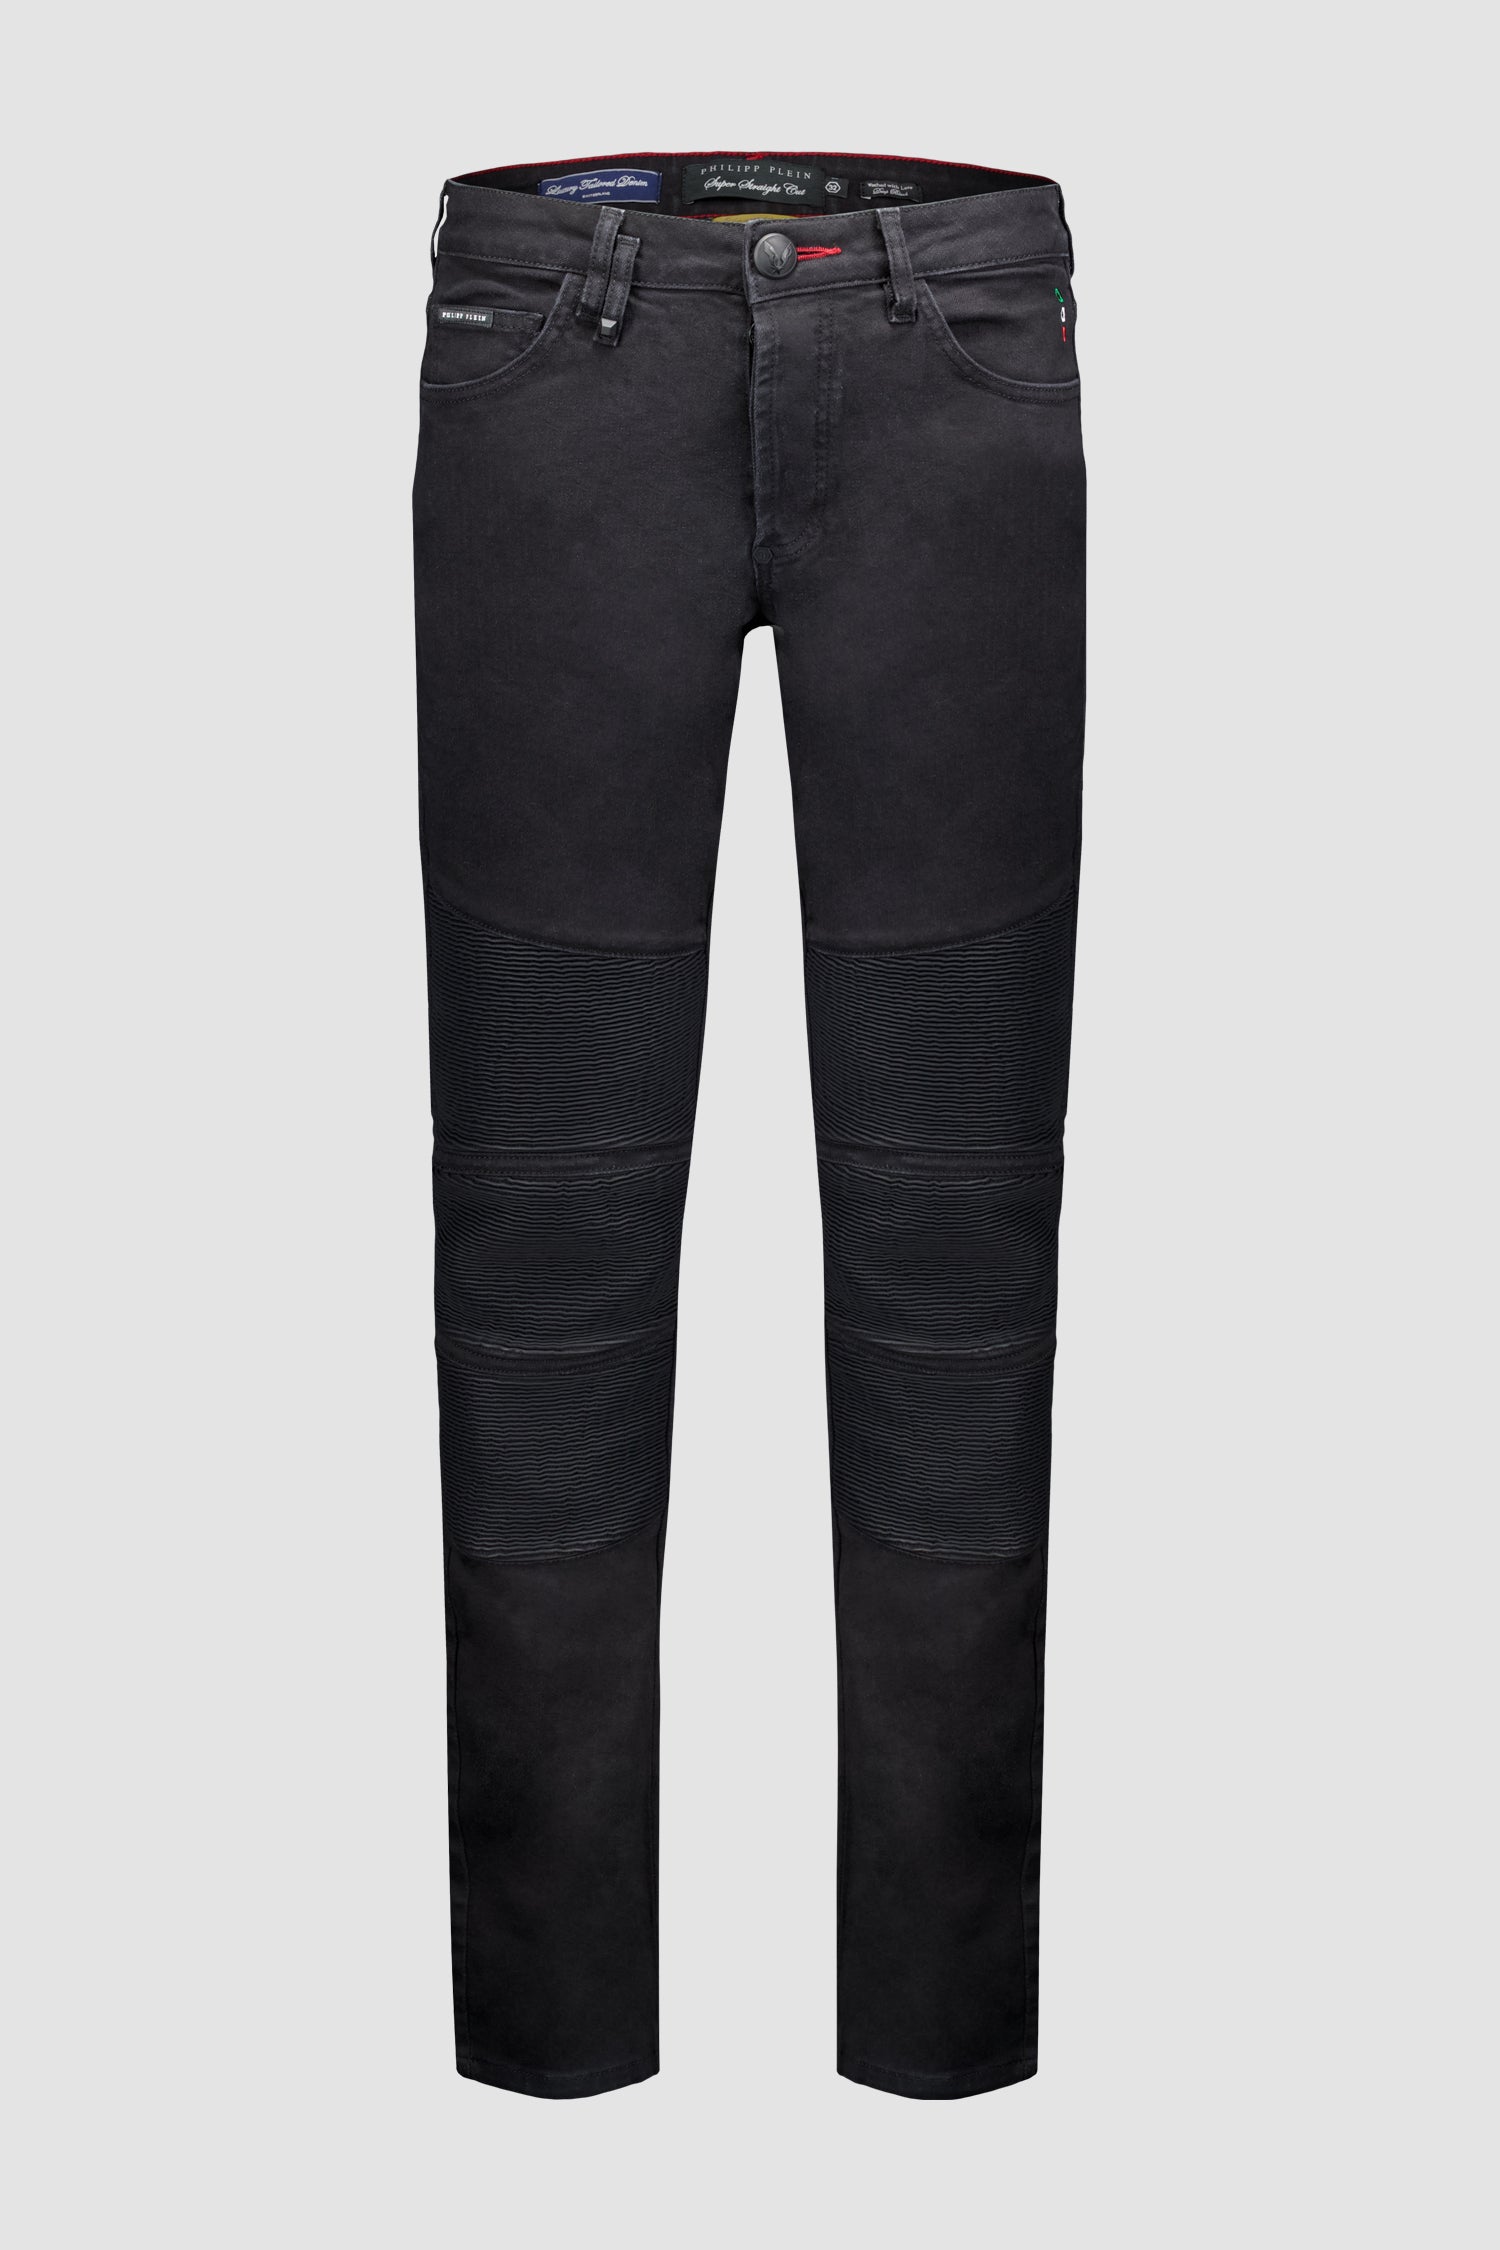 Philipp Plein Black Denim Super Straight Cut Trousers